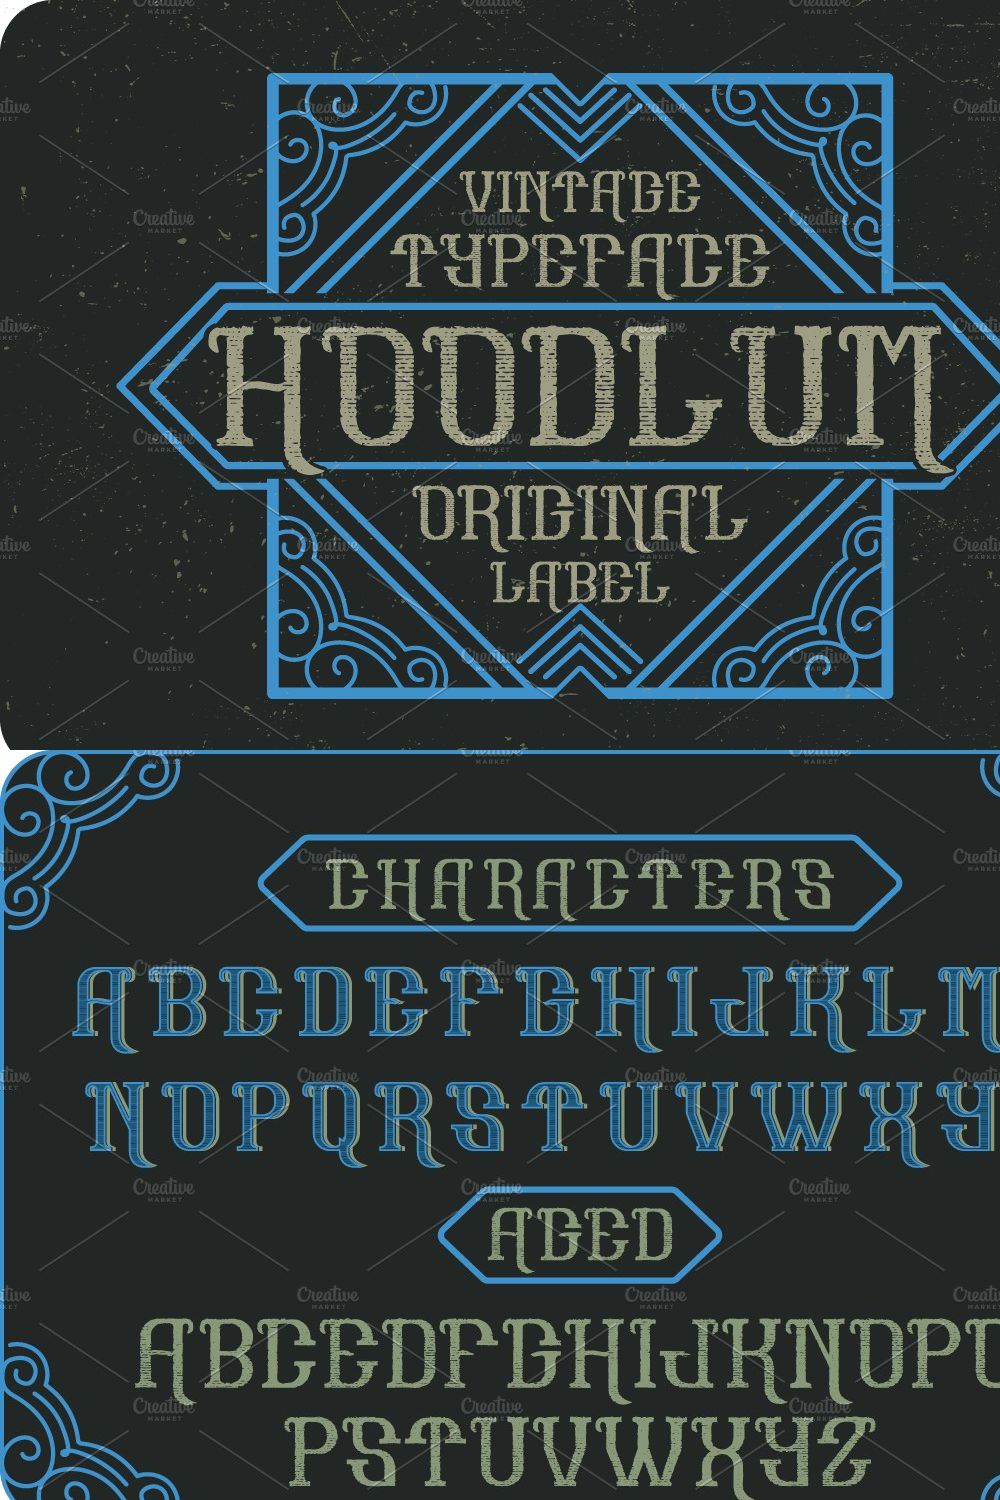 Hoodlum label font pinterest preview image.